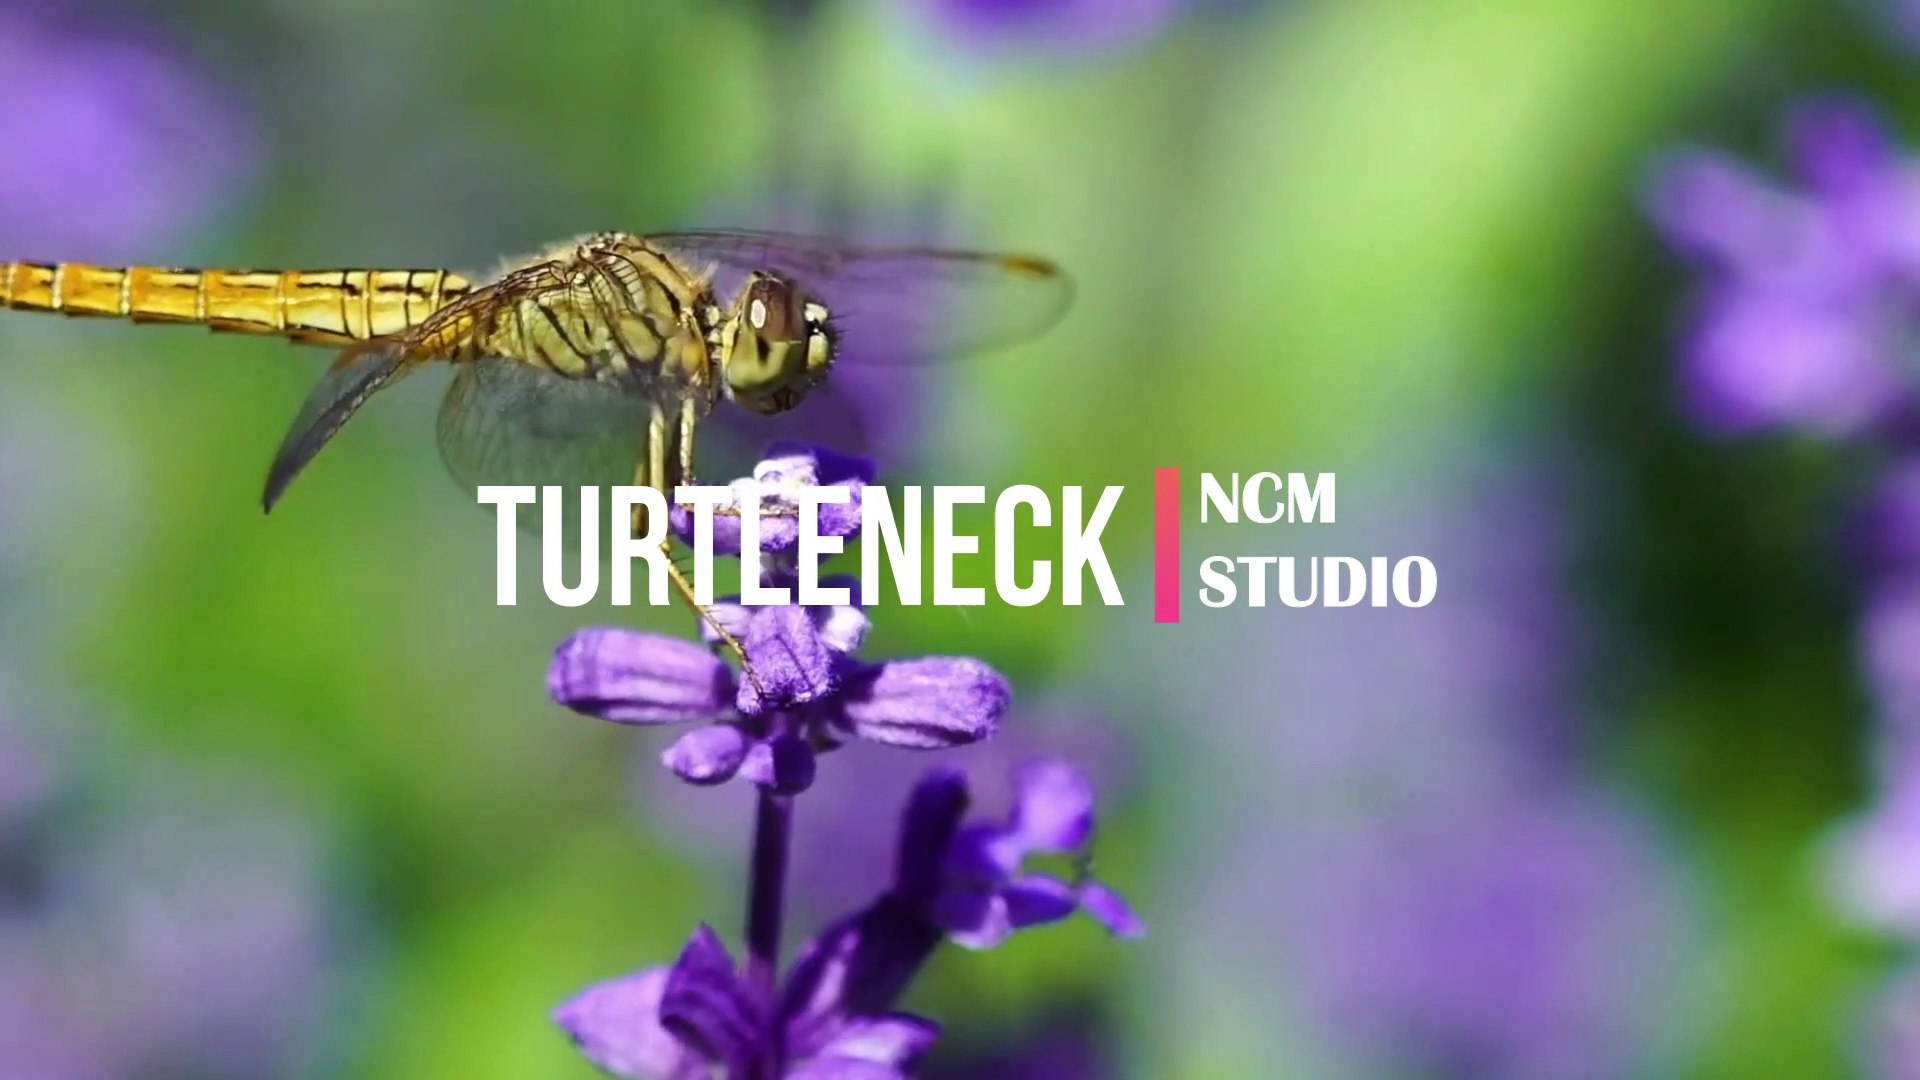 Turtleneck - TrackTribe   Alternative Music, Happy Music, Travel Music